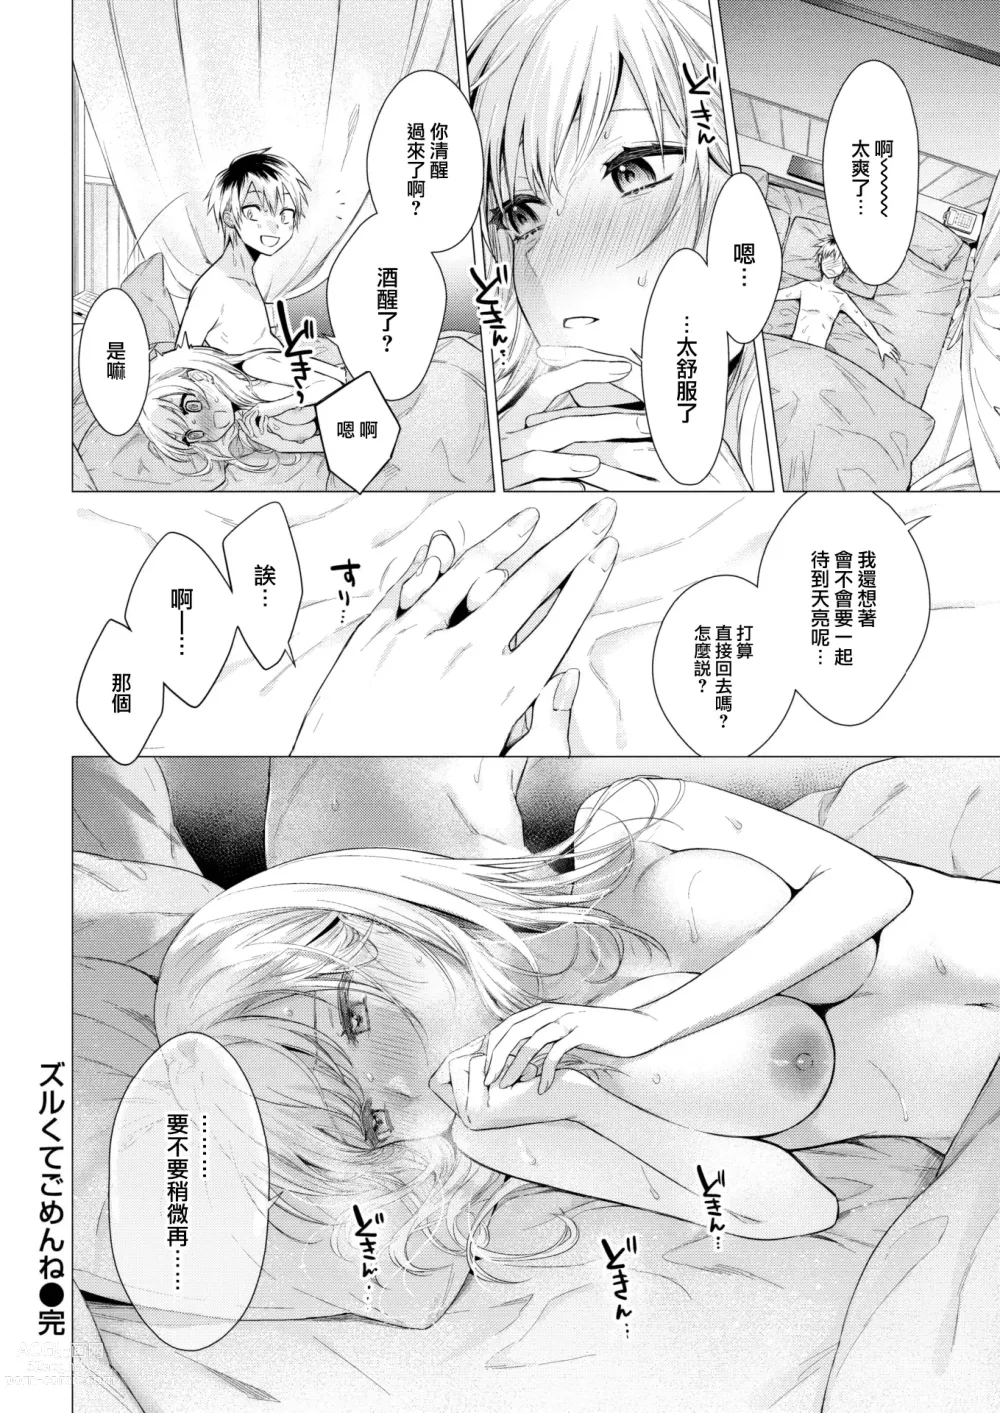 Page 25 of manga Zurukute Gomenne